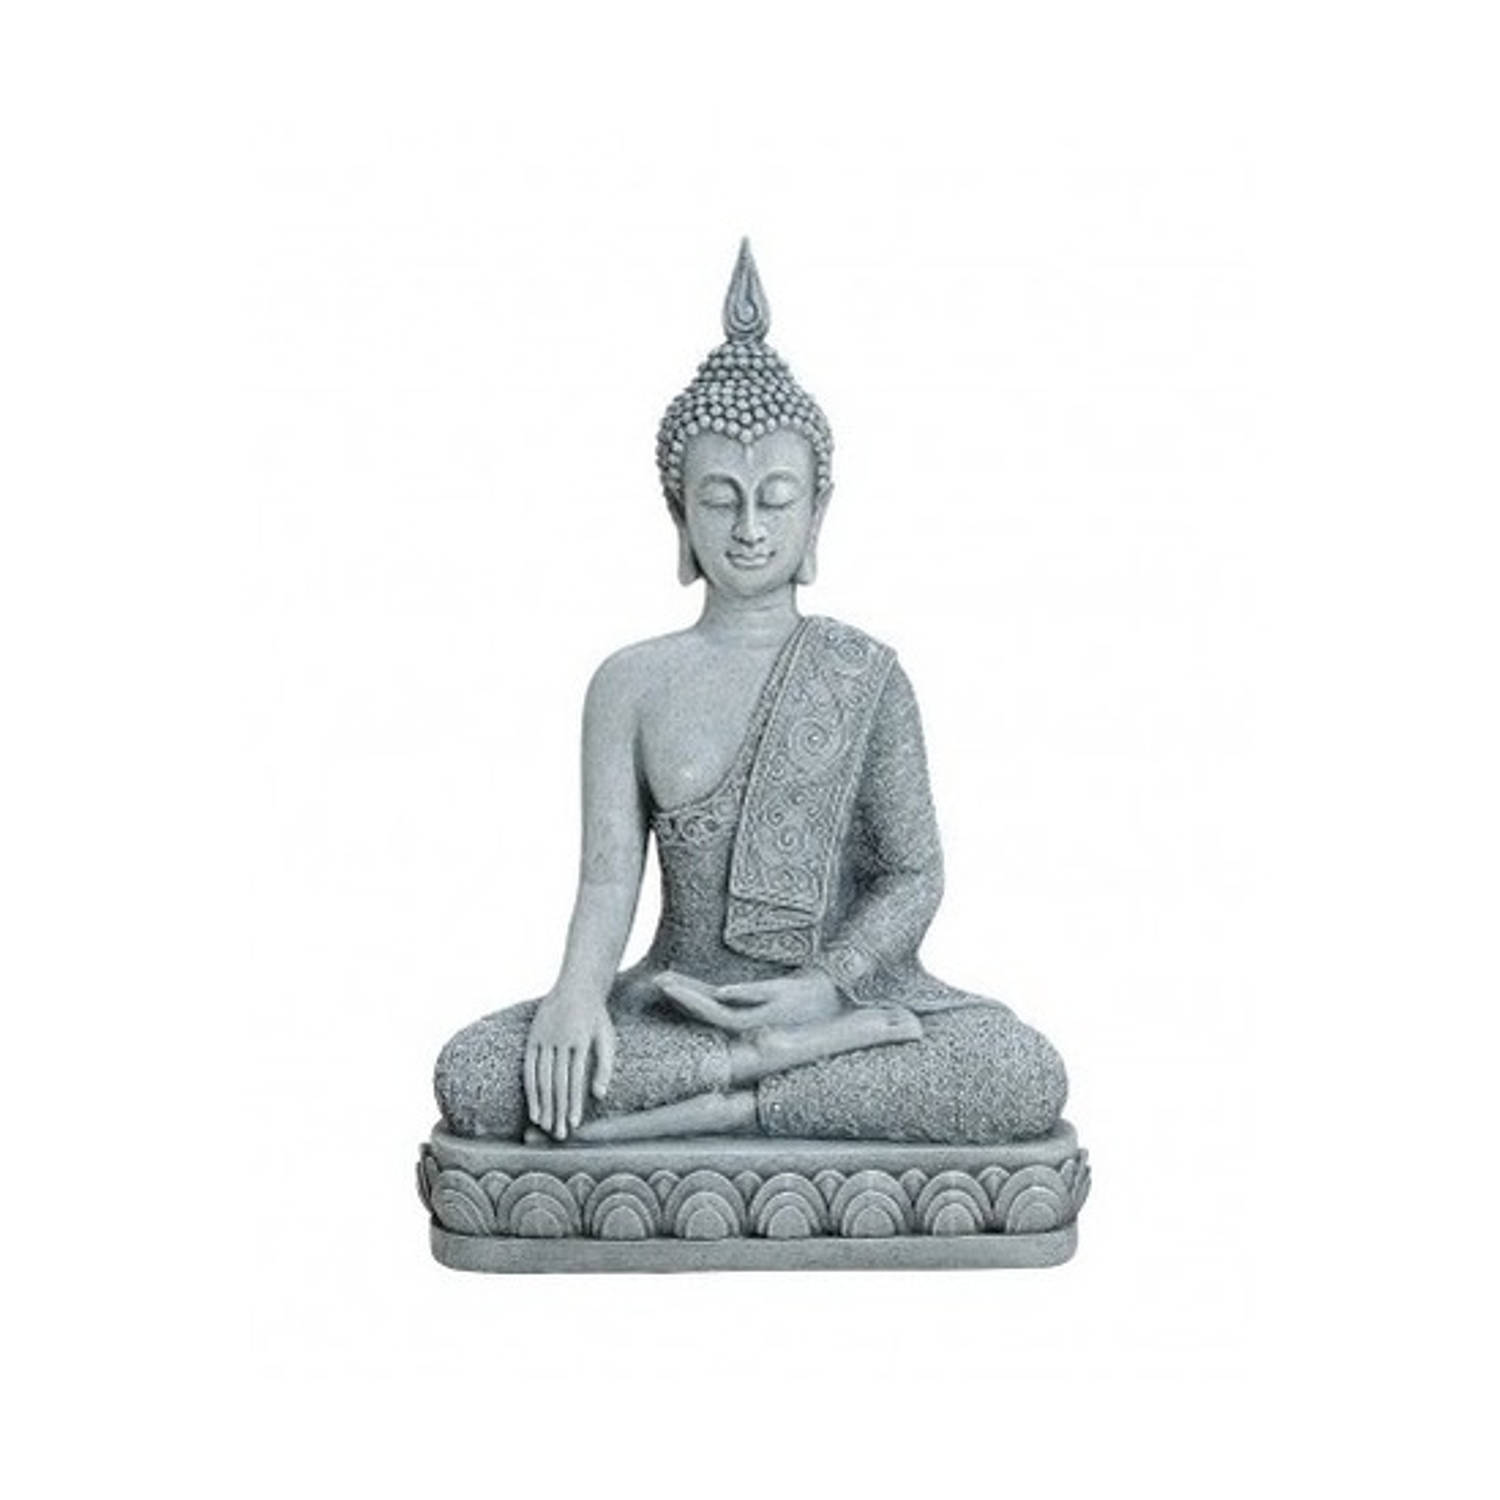 Boeddha Beeld 39 Cm Van Polystone - Grijs